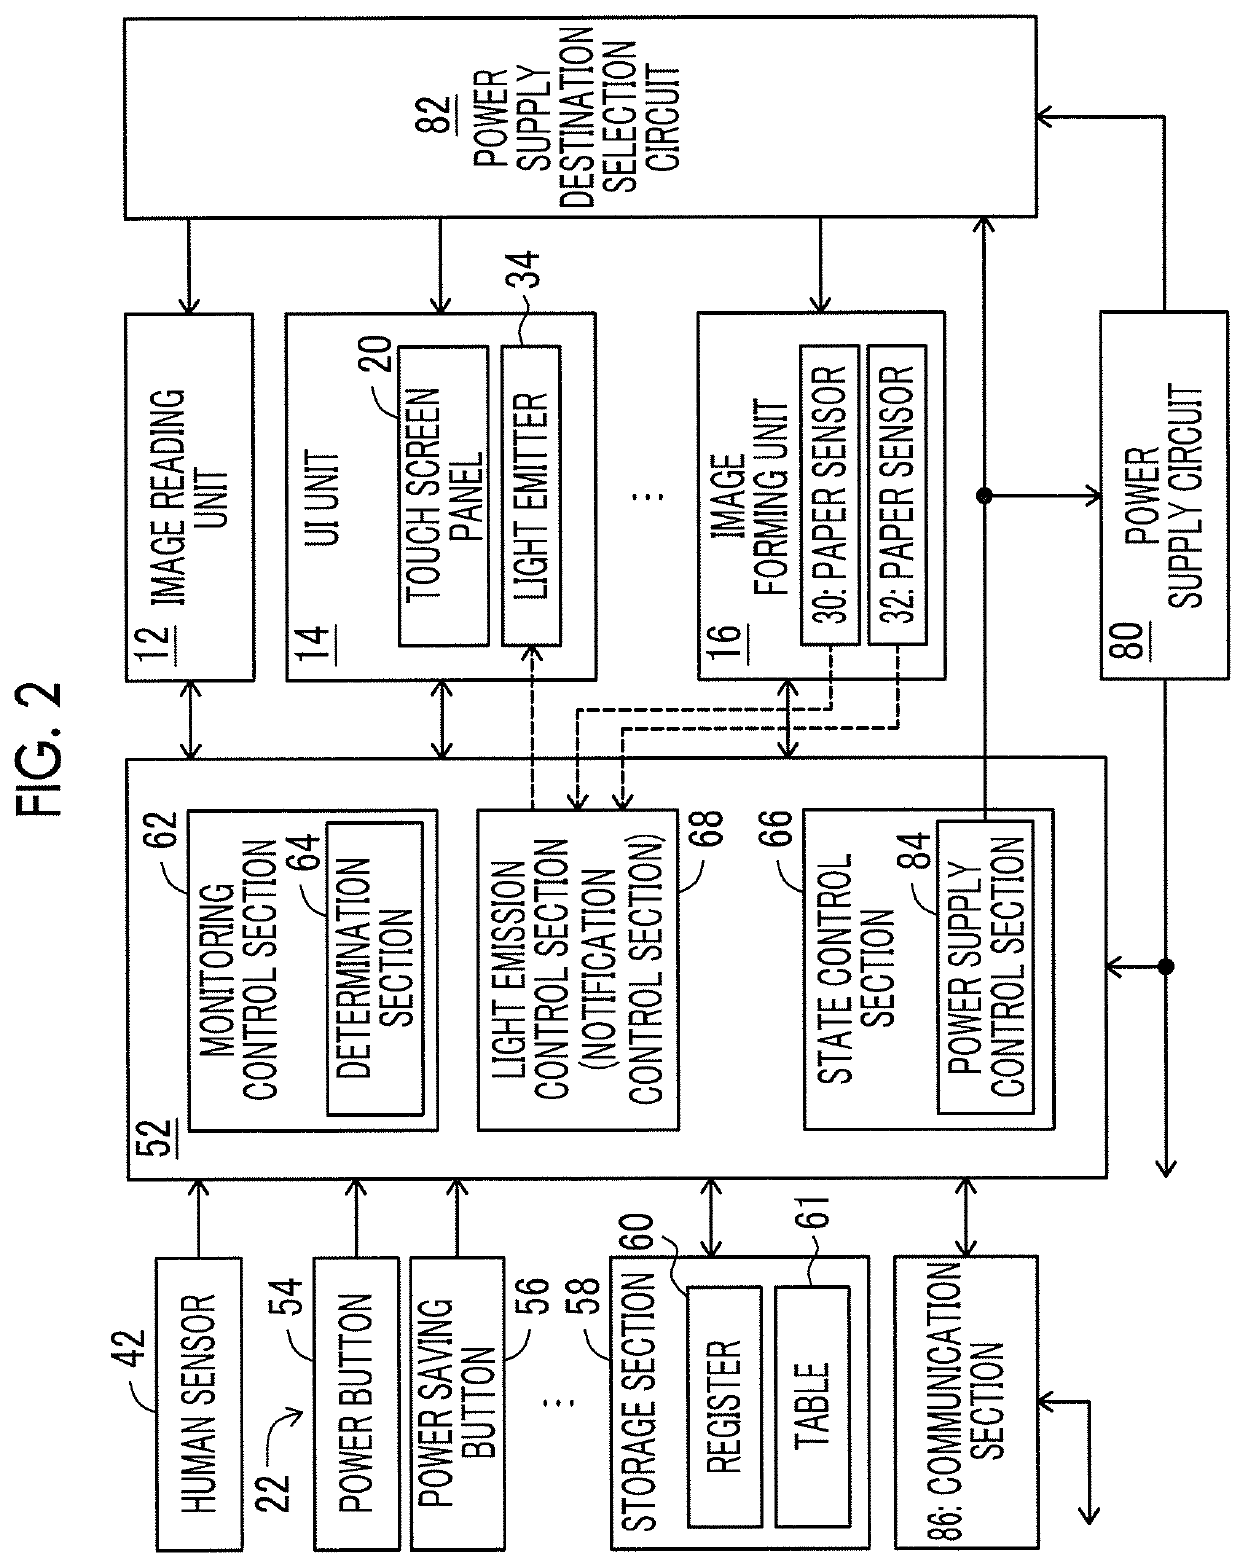 Image forming apparatus and non-transitory computer readable medium storing program